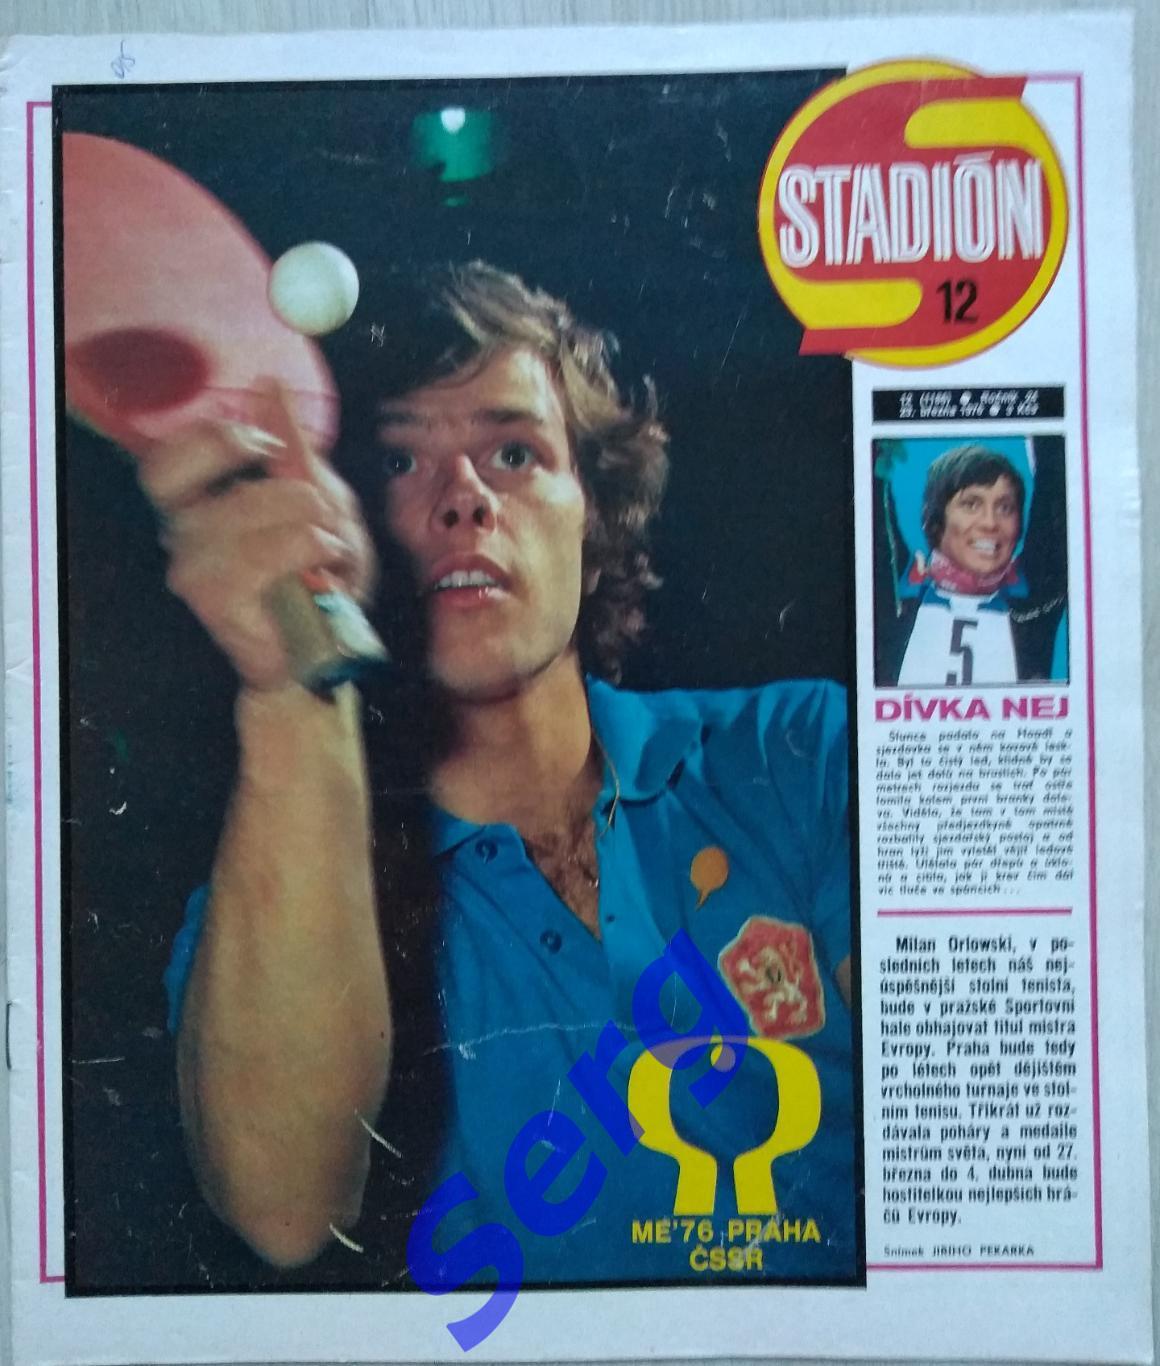 Журнал Стадион (Stadion) №12 1976 год